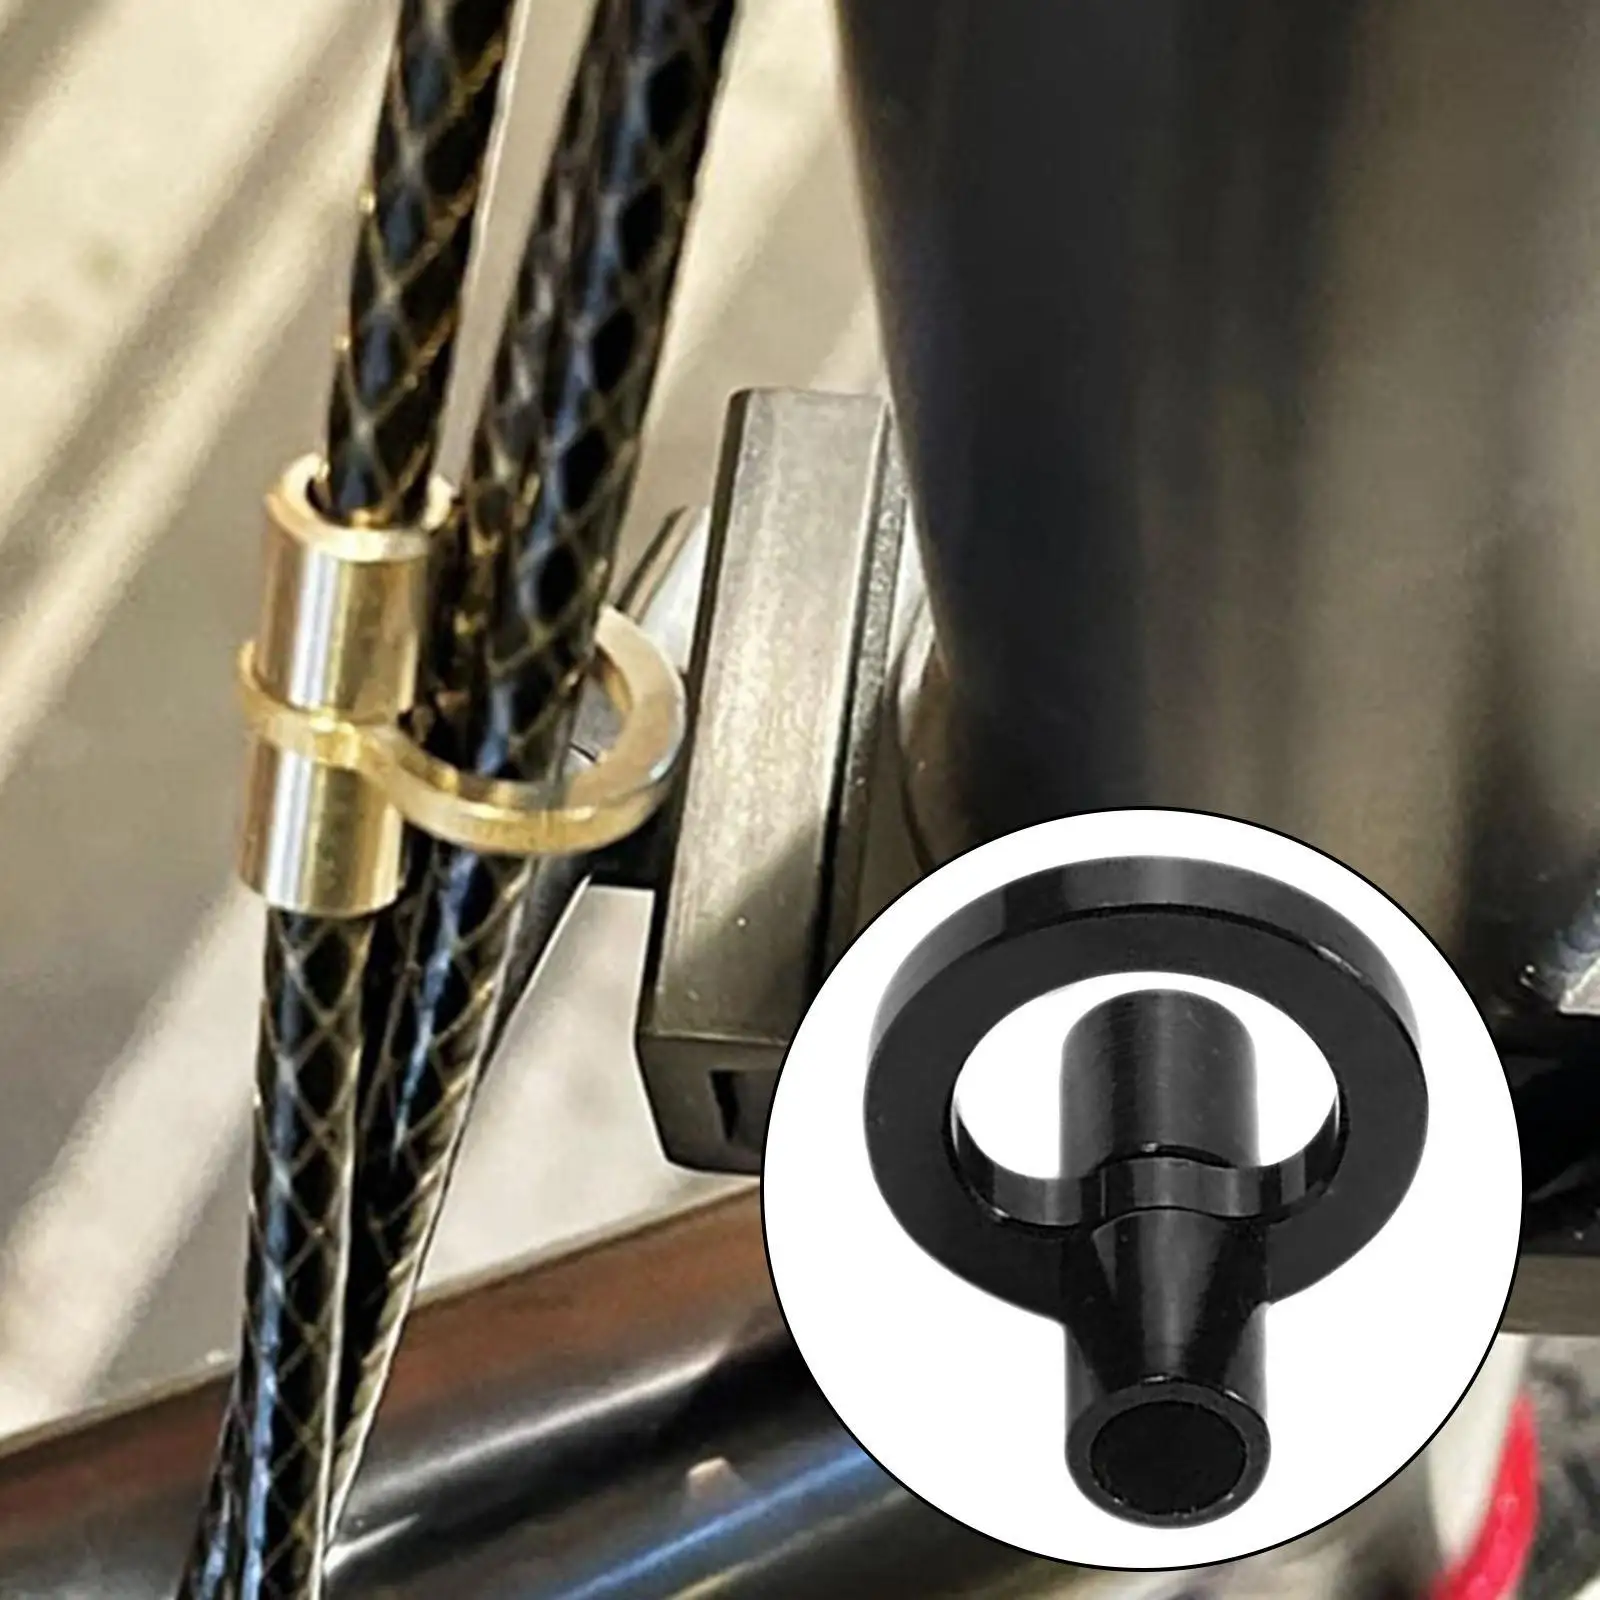 Brake  Clip Fixed Clip Mountain Bike Wire Holder Organizer Accessories for Bike BMX